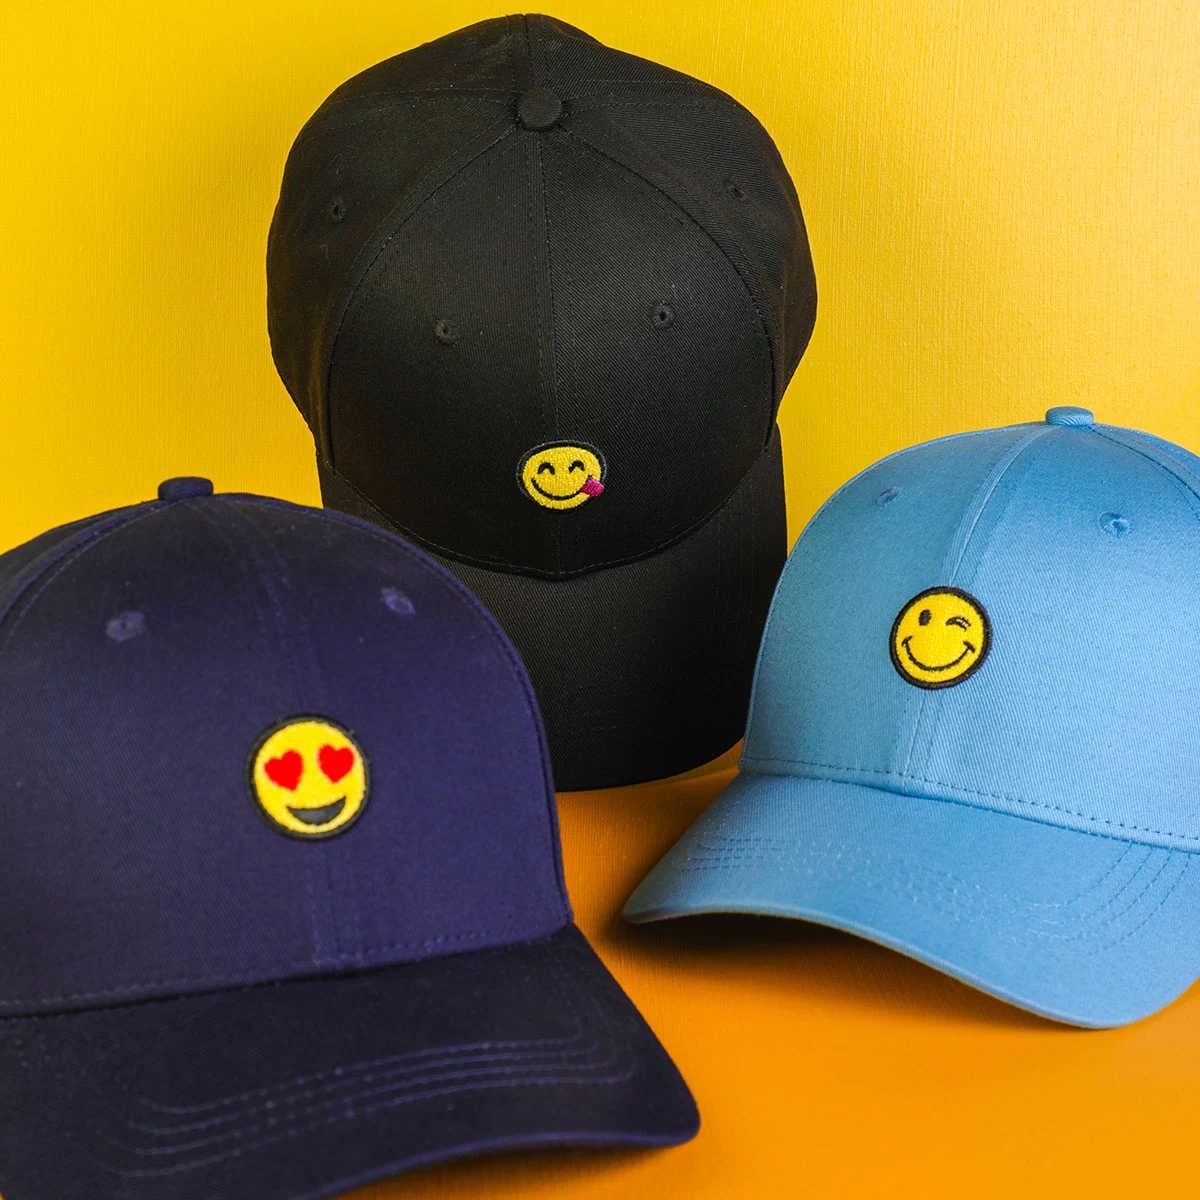 embroidered smiley face emoji logo baseball hats